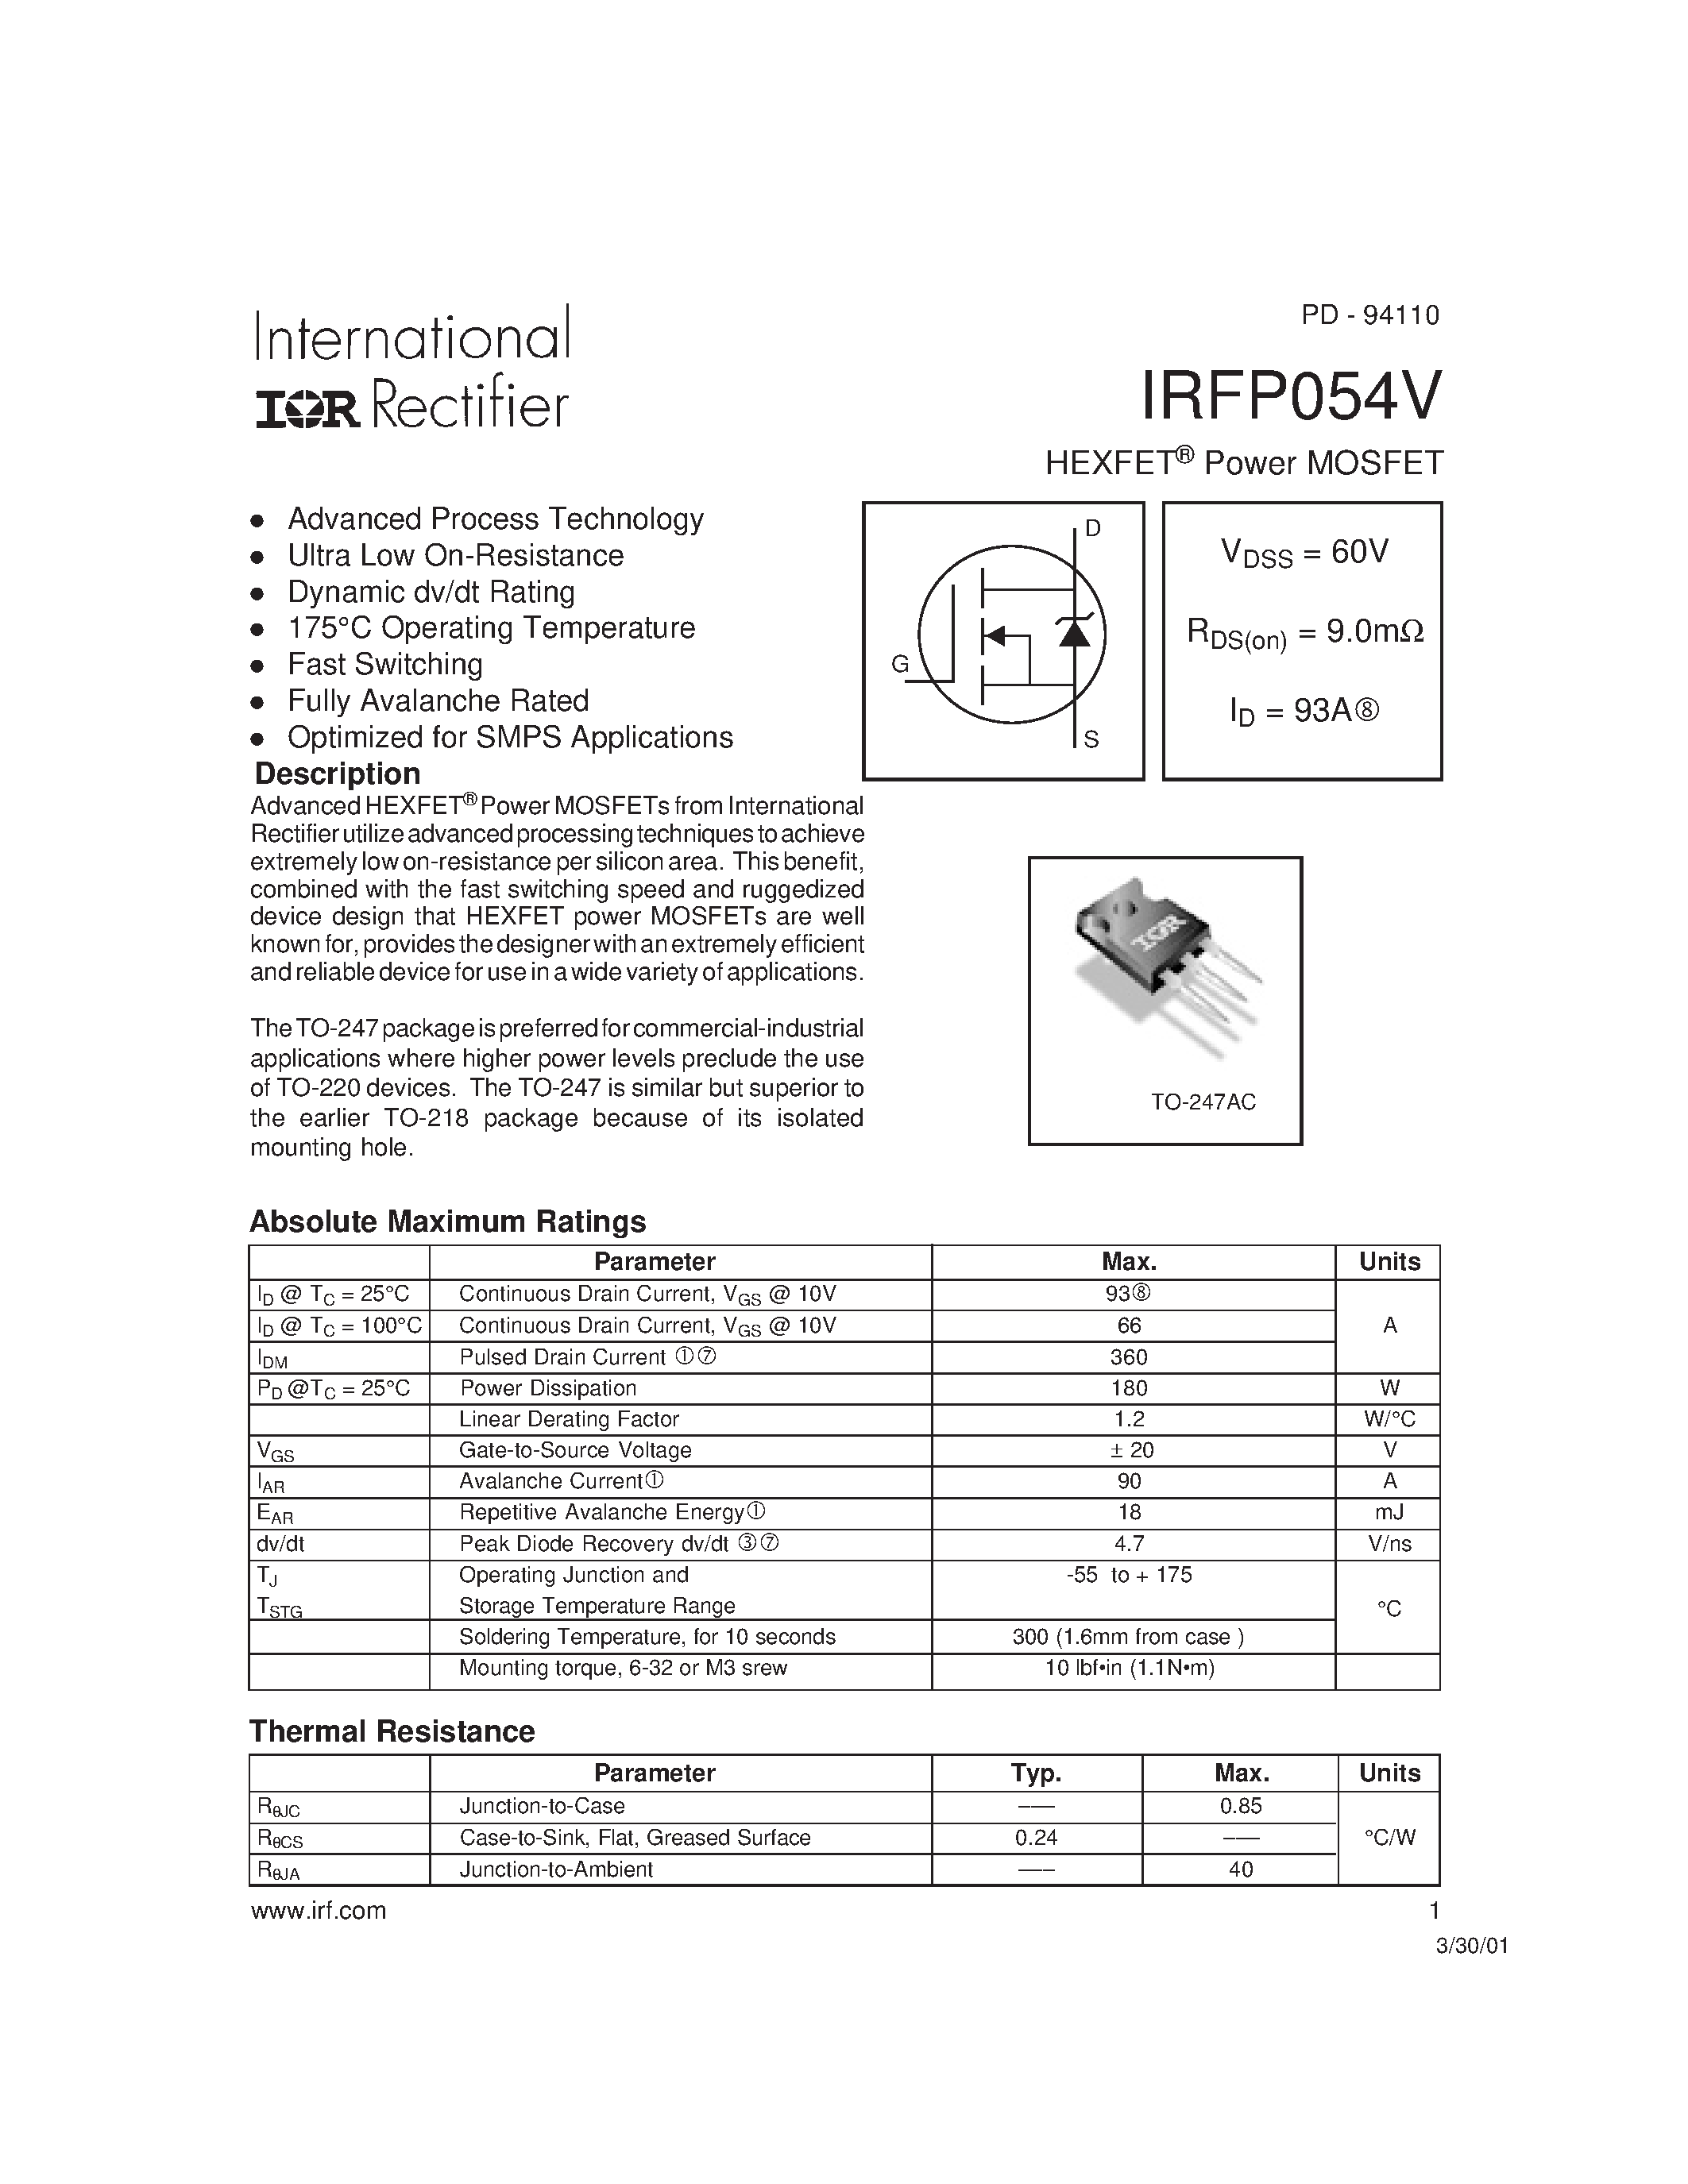 Даташит IRFP054V - Power MOSFET страница 1